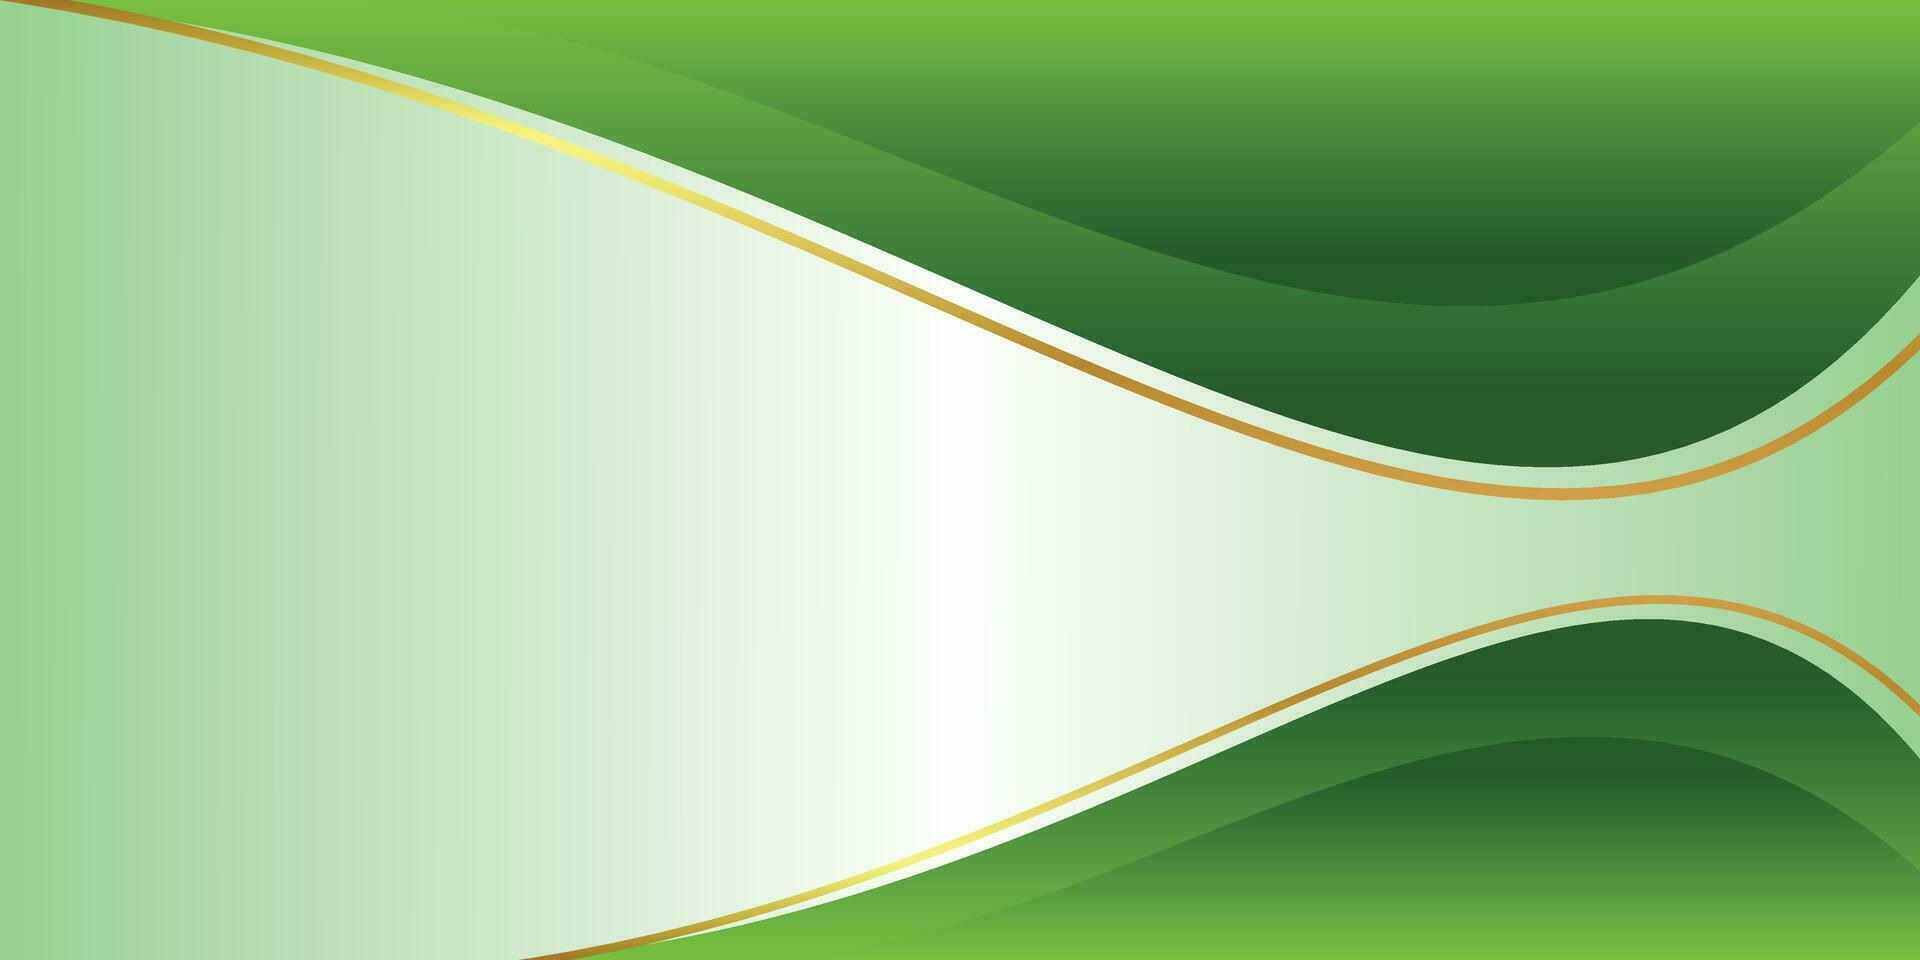 tierra día antecedentes verde color elegante gradación de resumen formas, hojas modelo con gratis espacio para texto. modelo para bandera, póster, social medios de comunicación, web. vector